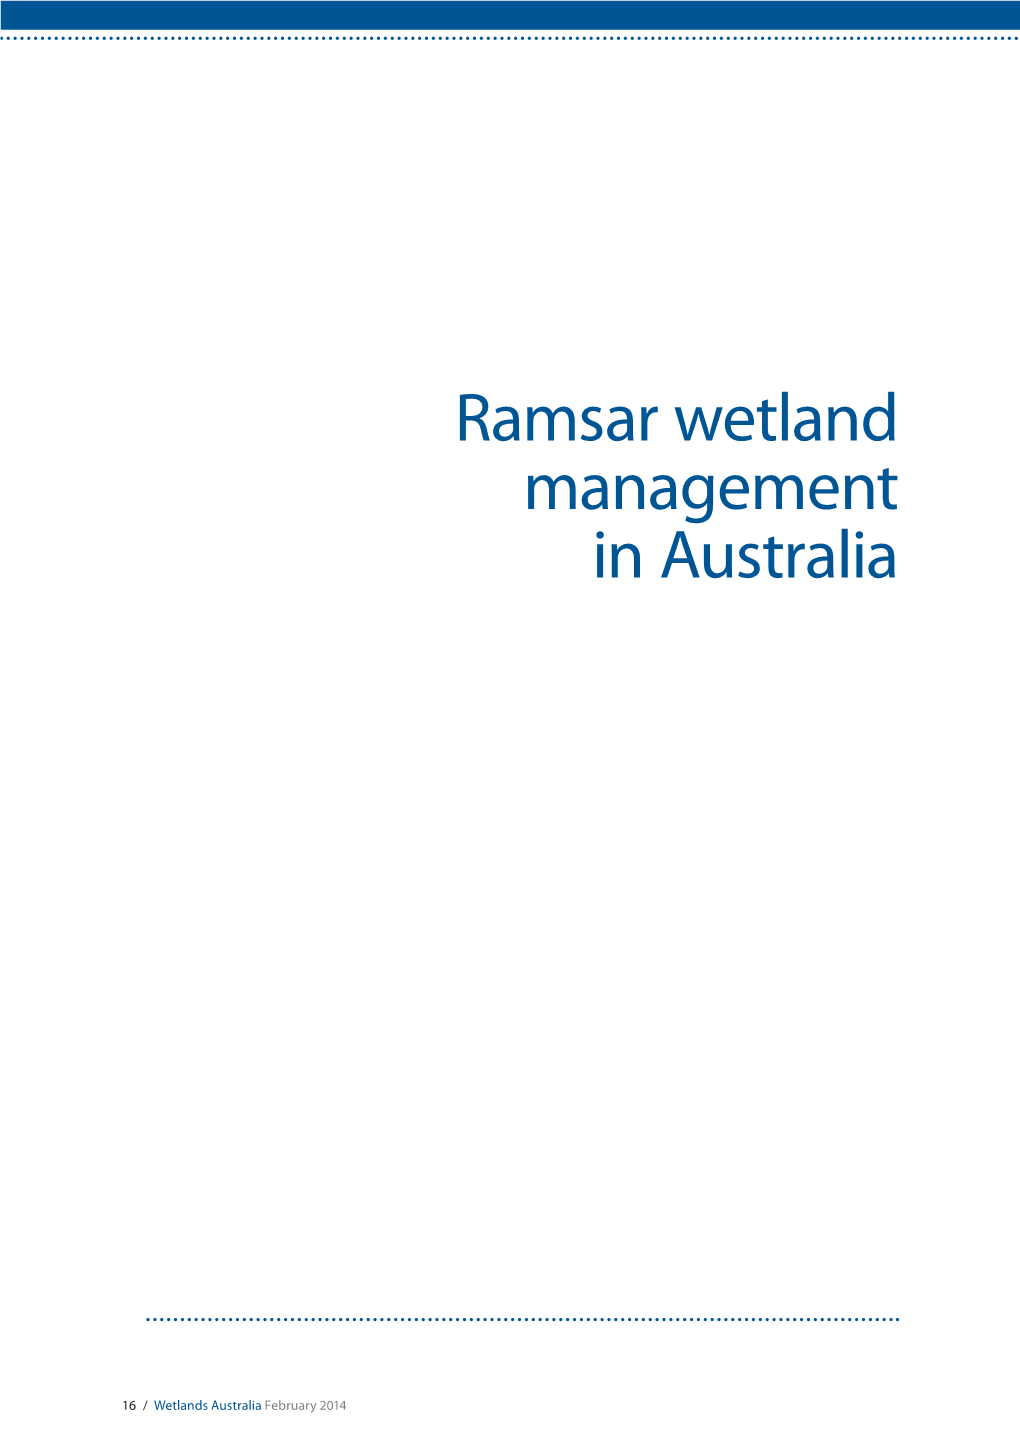 Ramsar Wetland Management in Australia